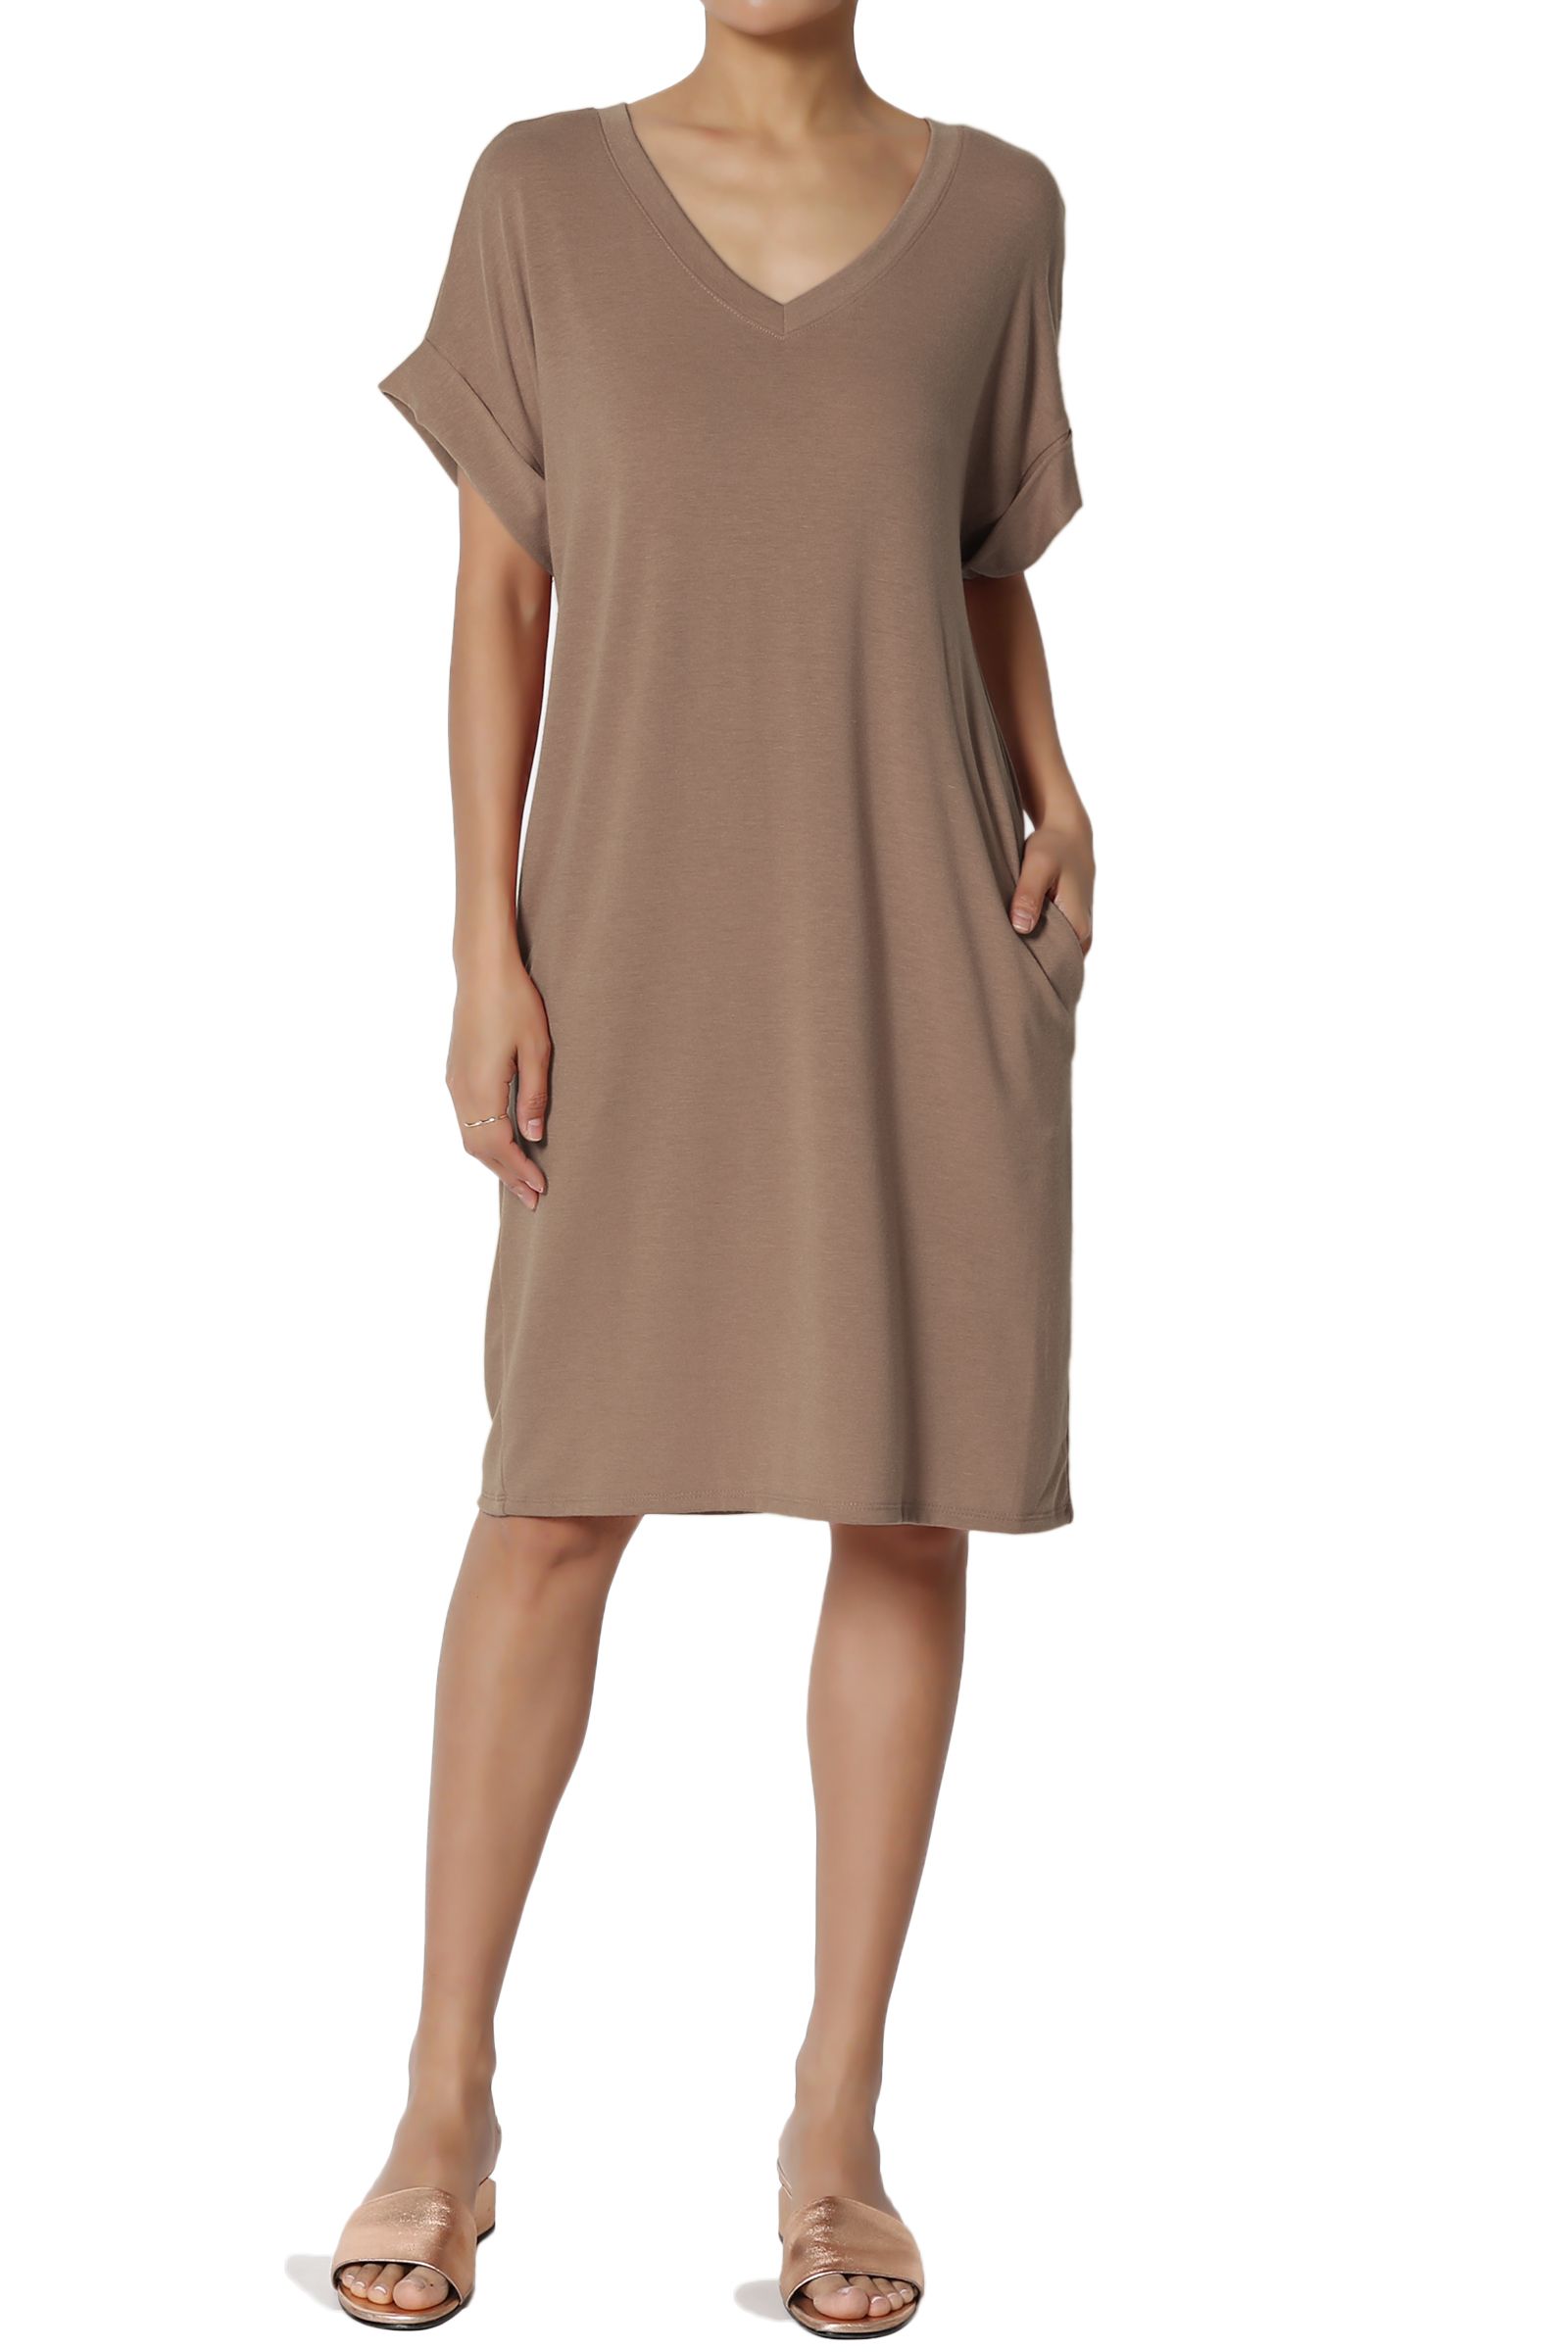 TheMogan Women's S~3X Jersey Cuffed Short Sleeve V-Neck Boxy Pocket T-Shirt Dress | Walmart (US)